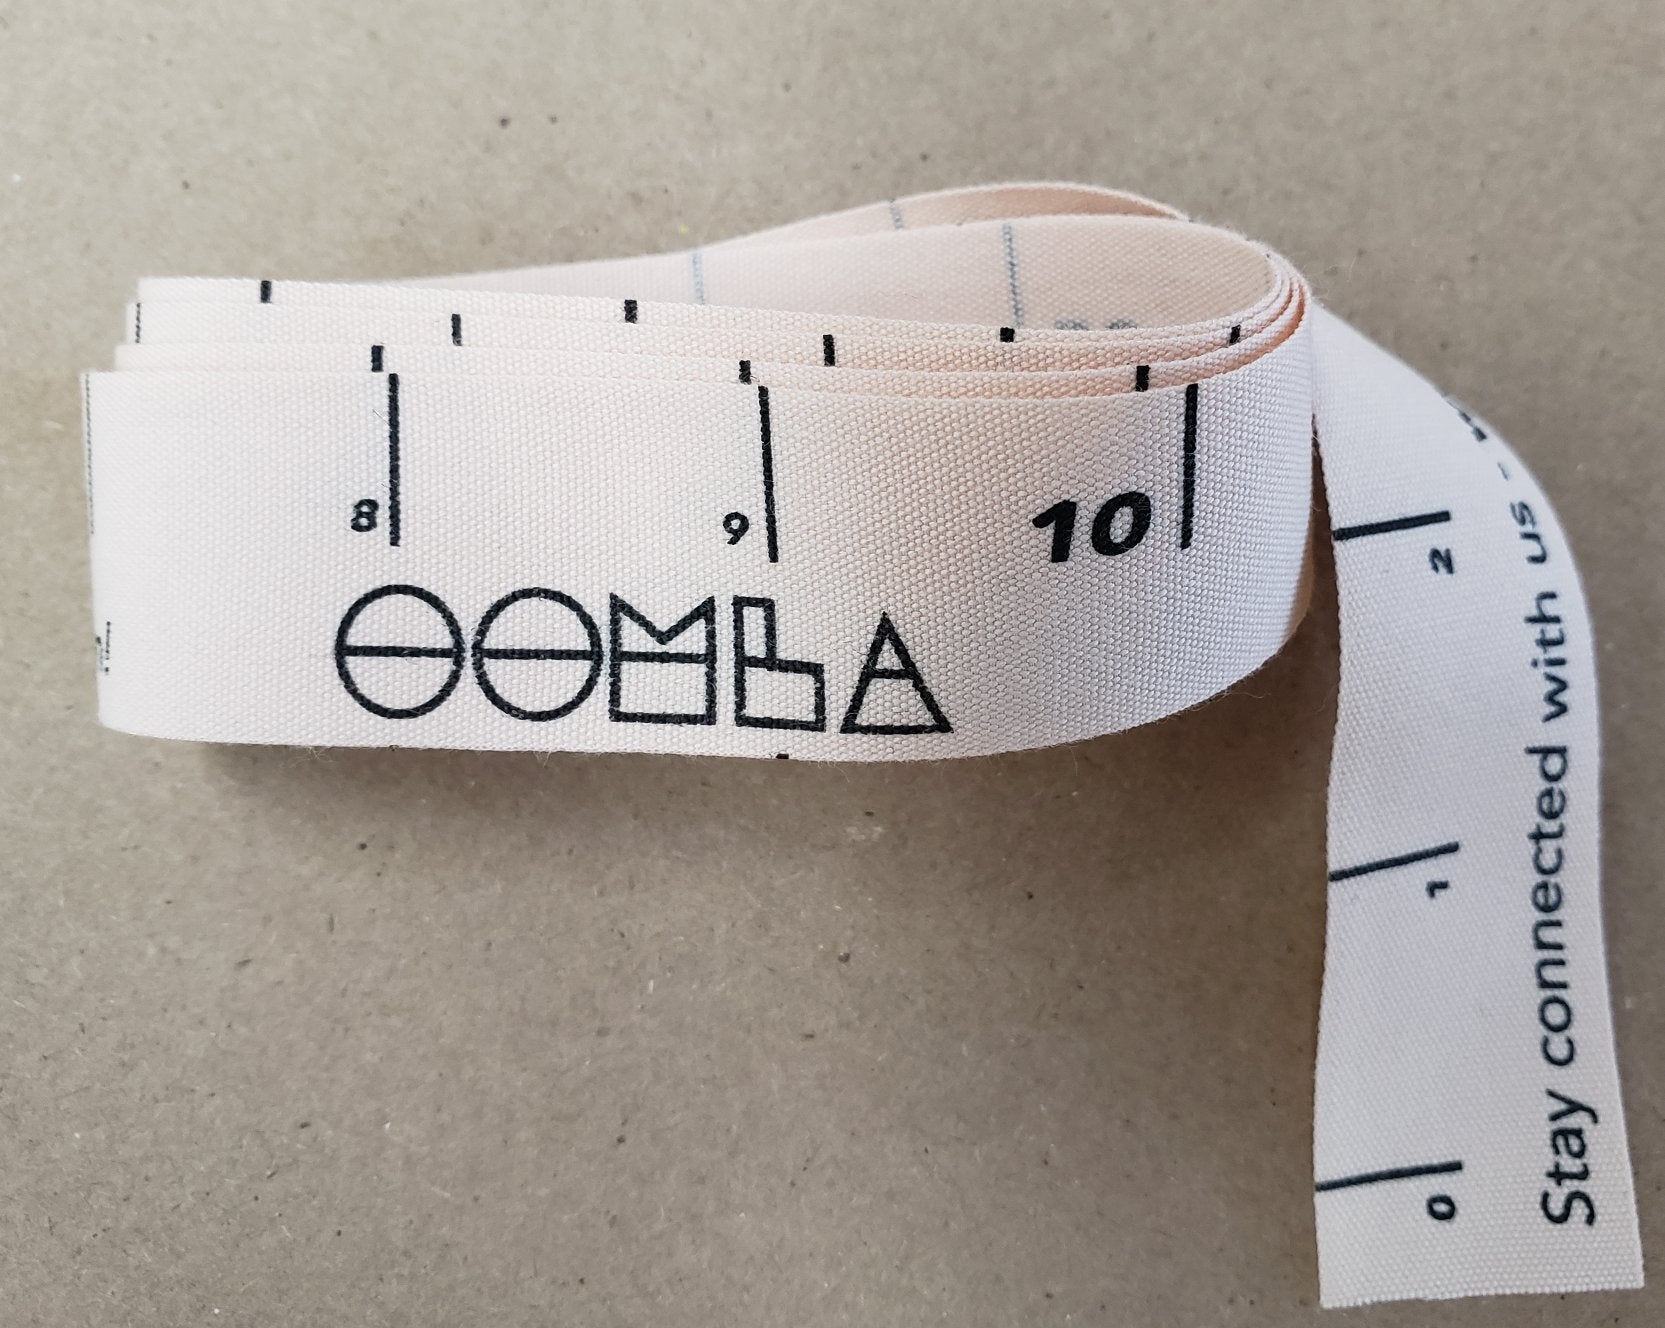 tape measure